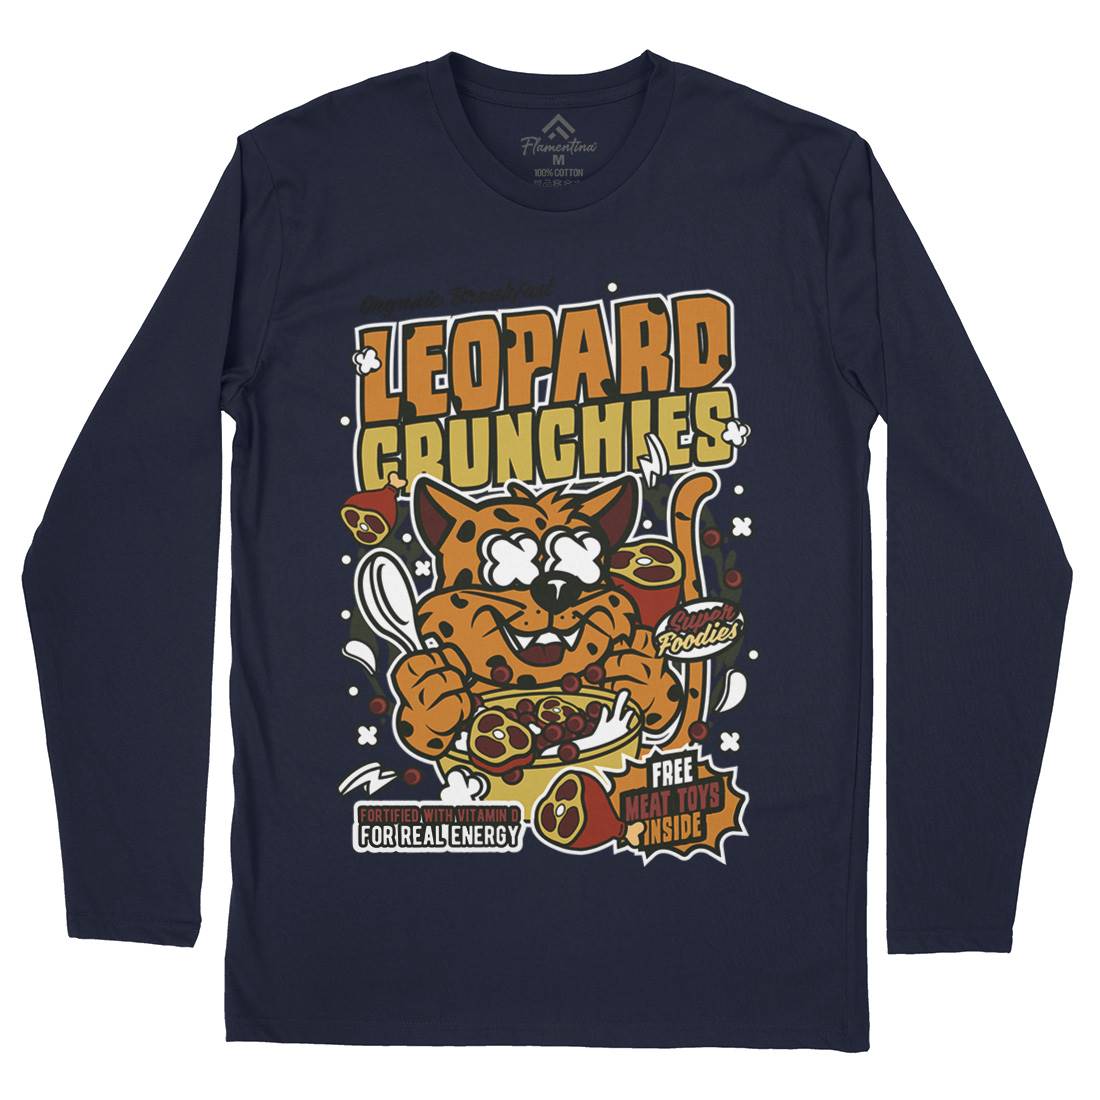 Leopard Crunchies Mens Long Sleeve T-Shirt Food C579